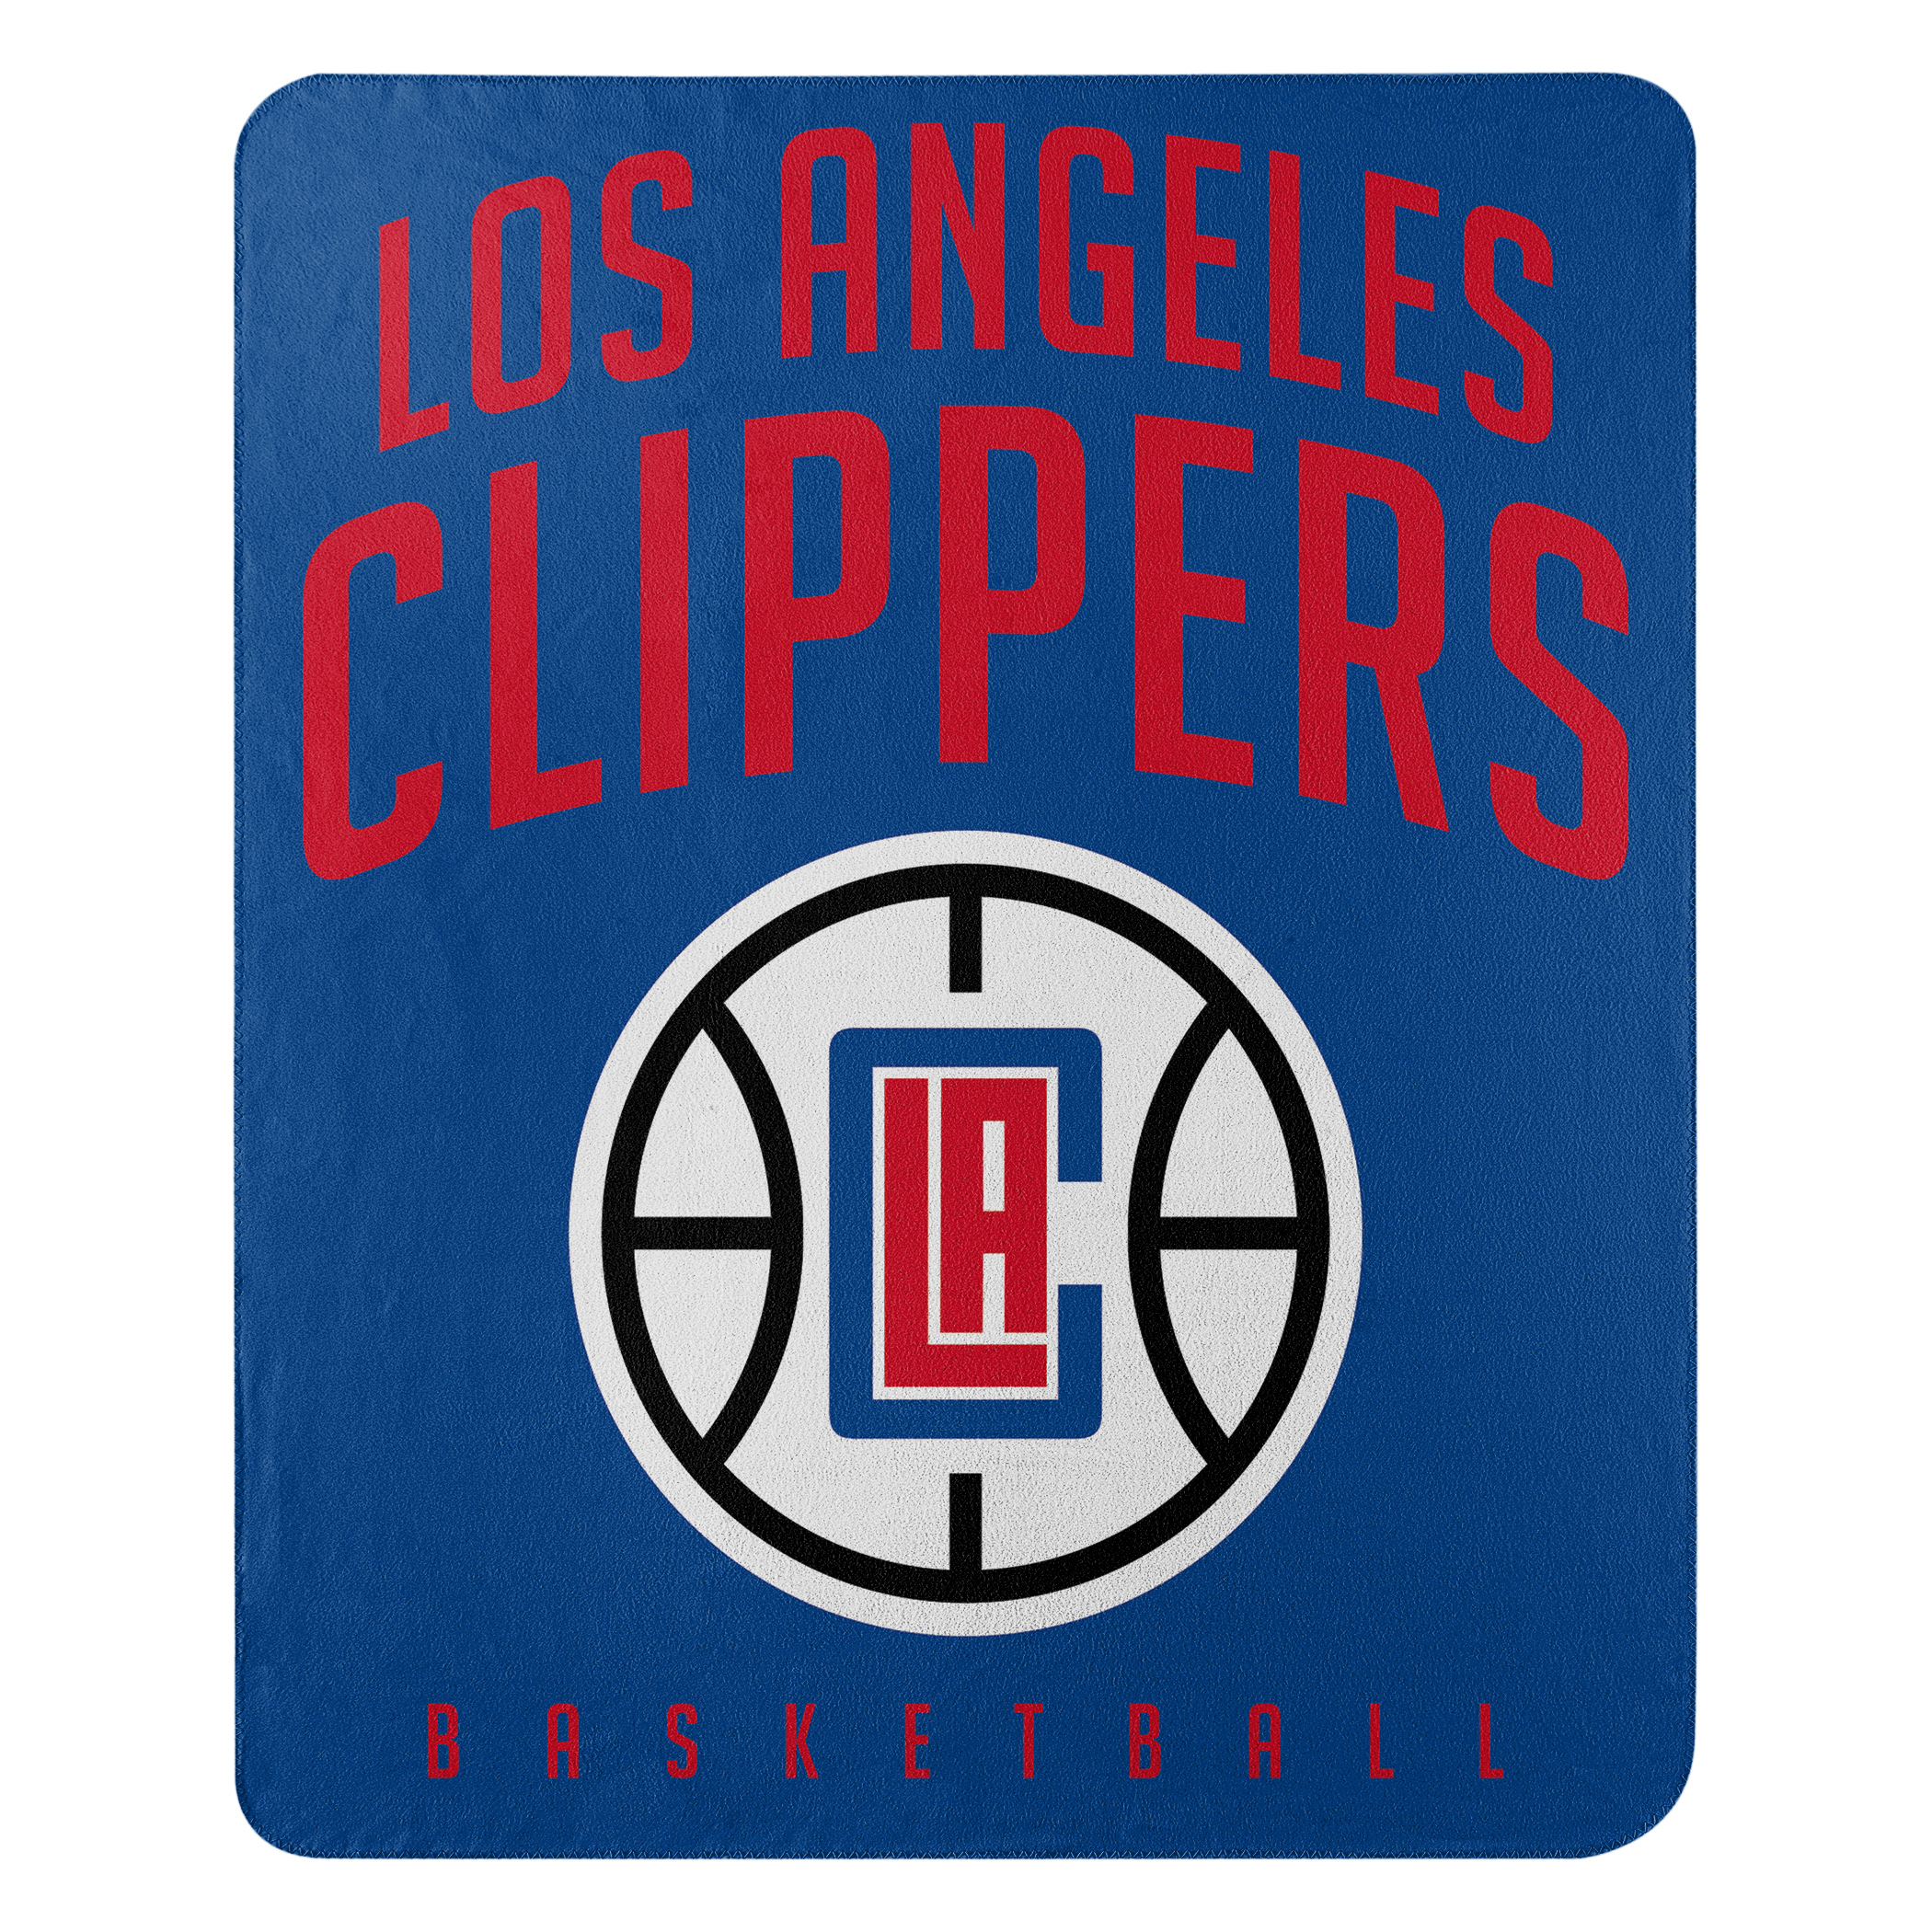 Los Angeles Clippers Blanket 50x60 Fleece Layup Design